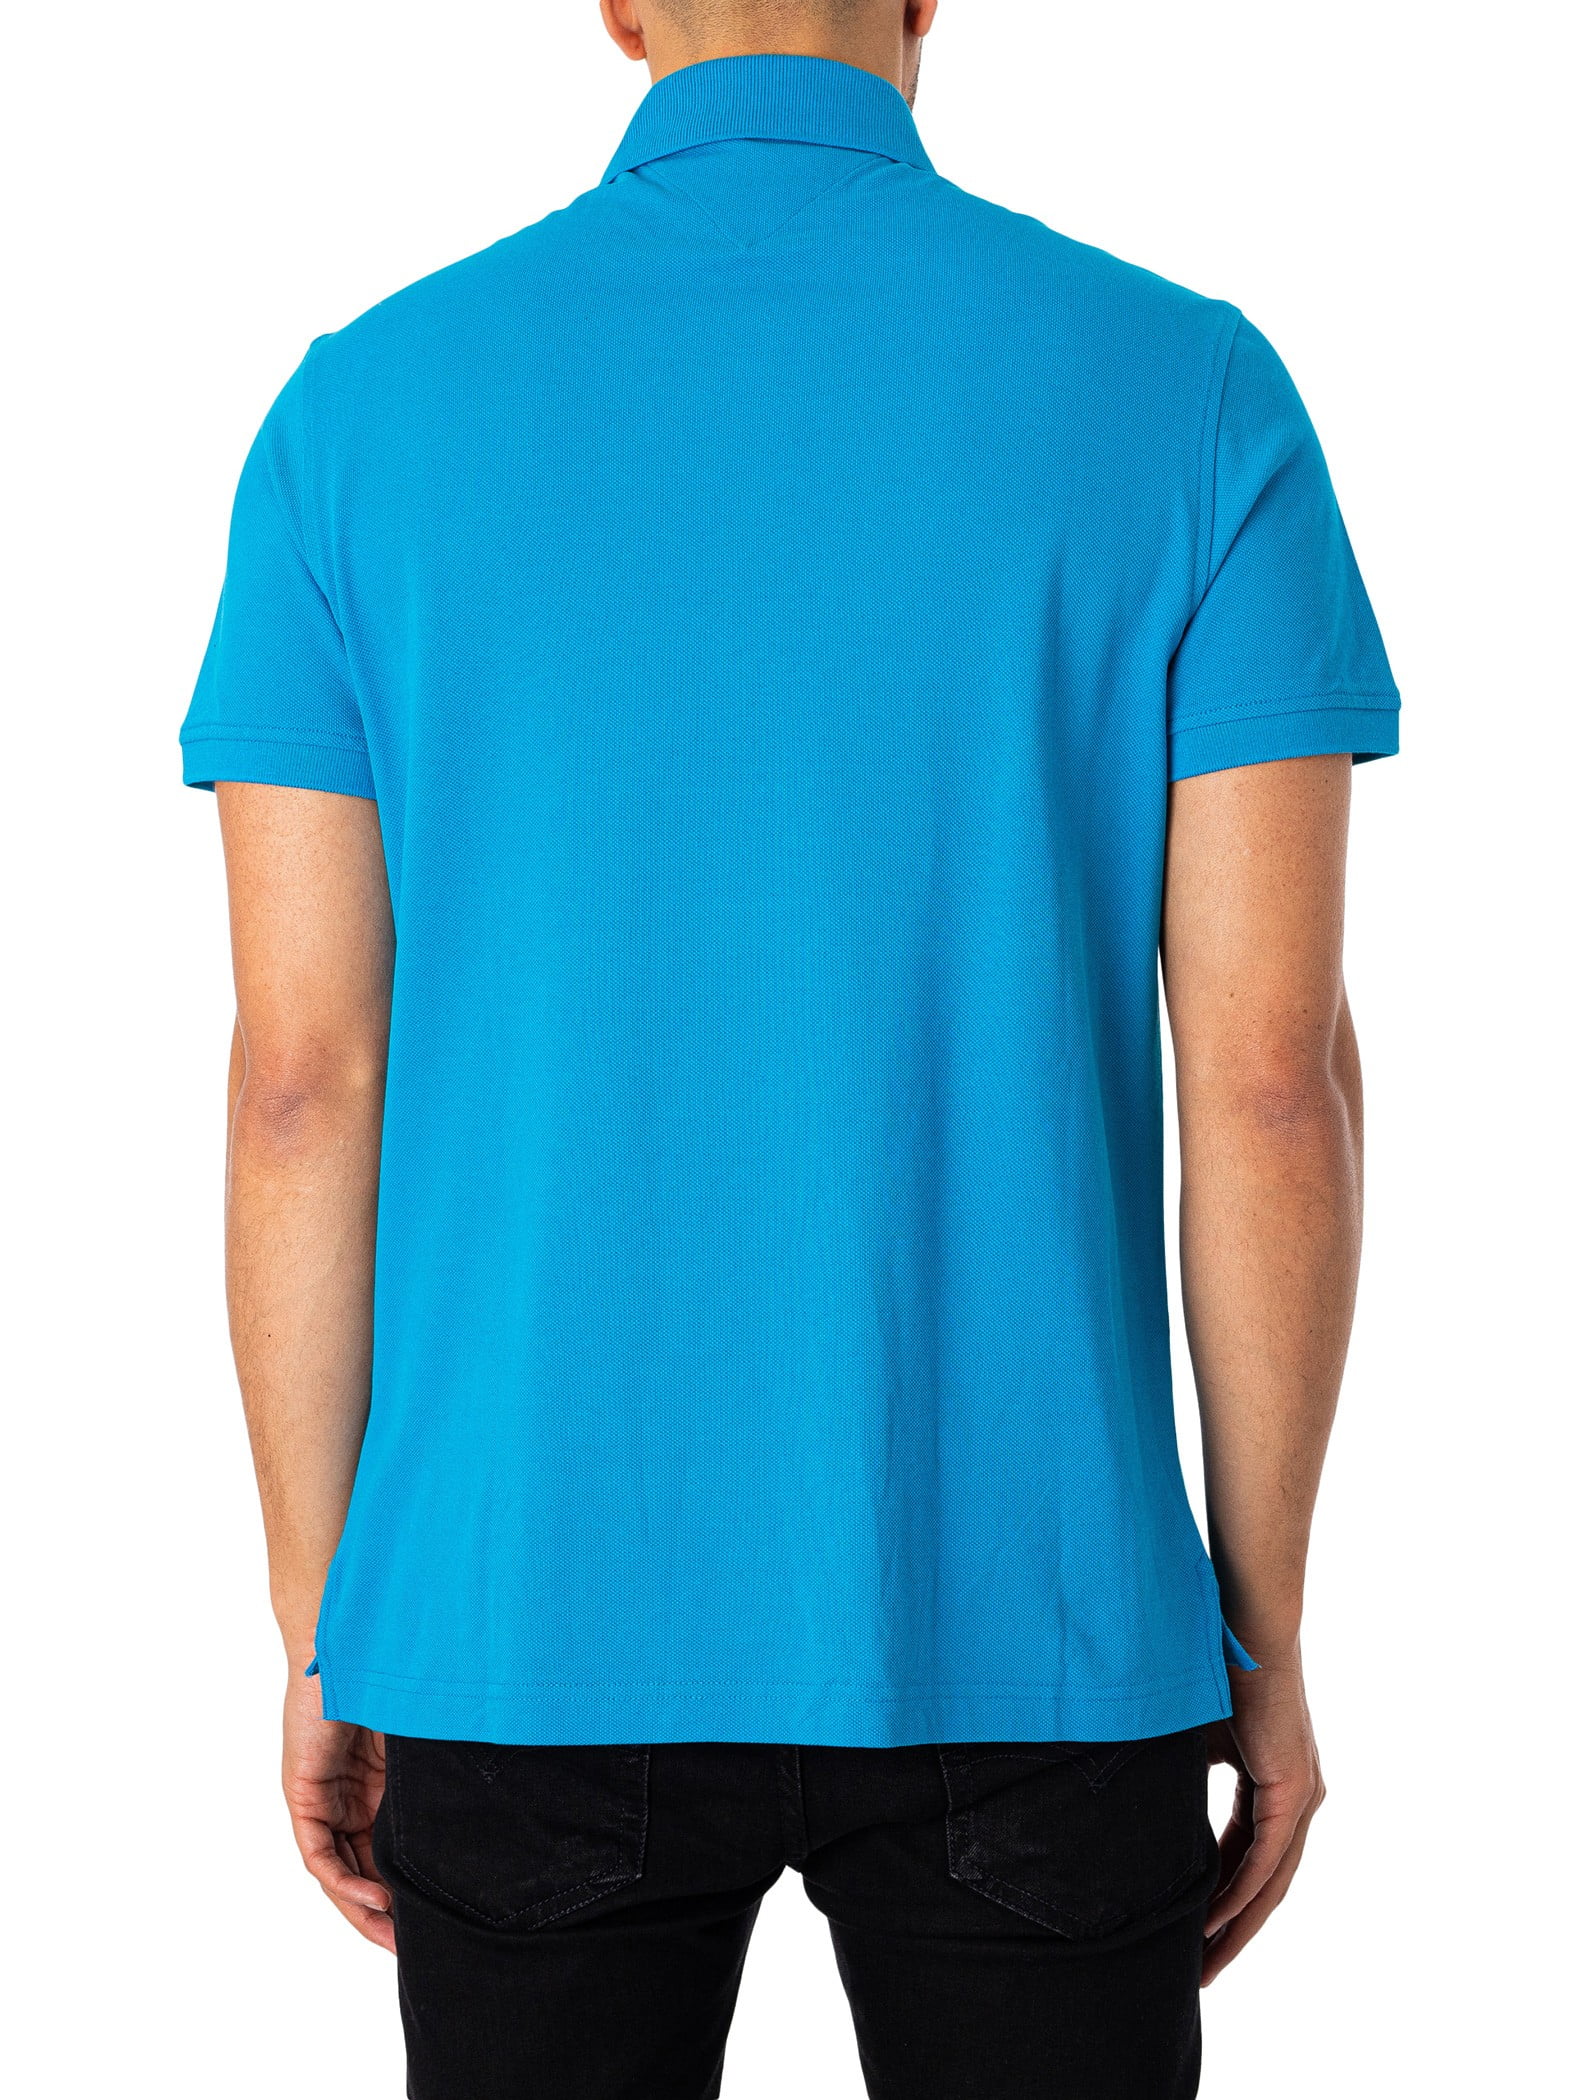 Hilfiger Shirt, Regular 1985 Blue Polo Tommy